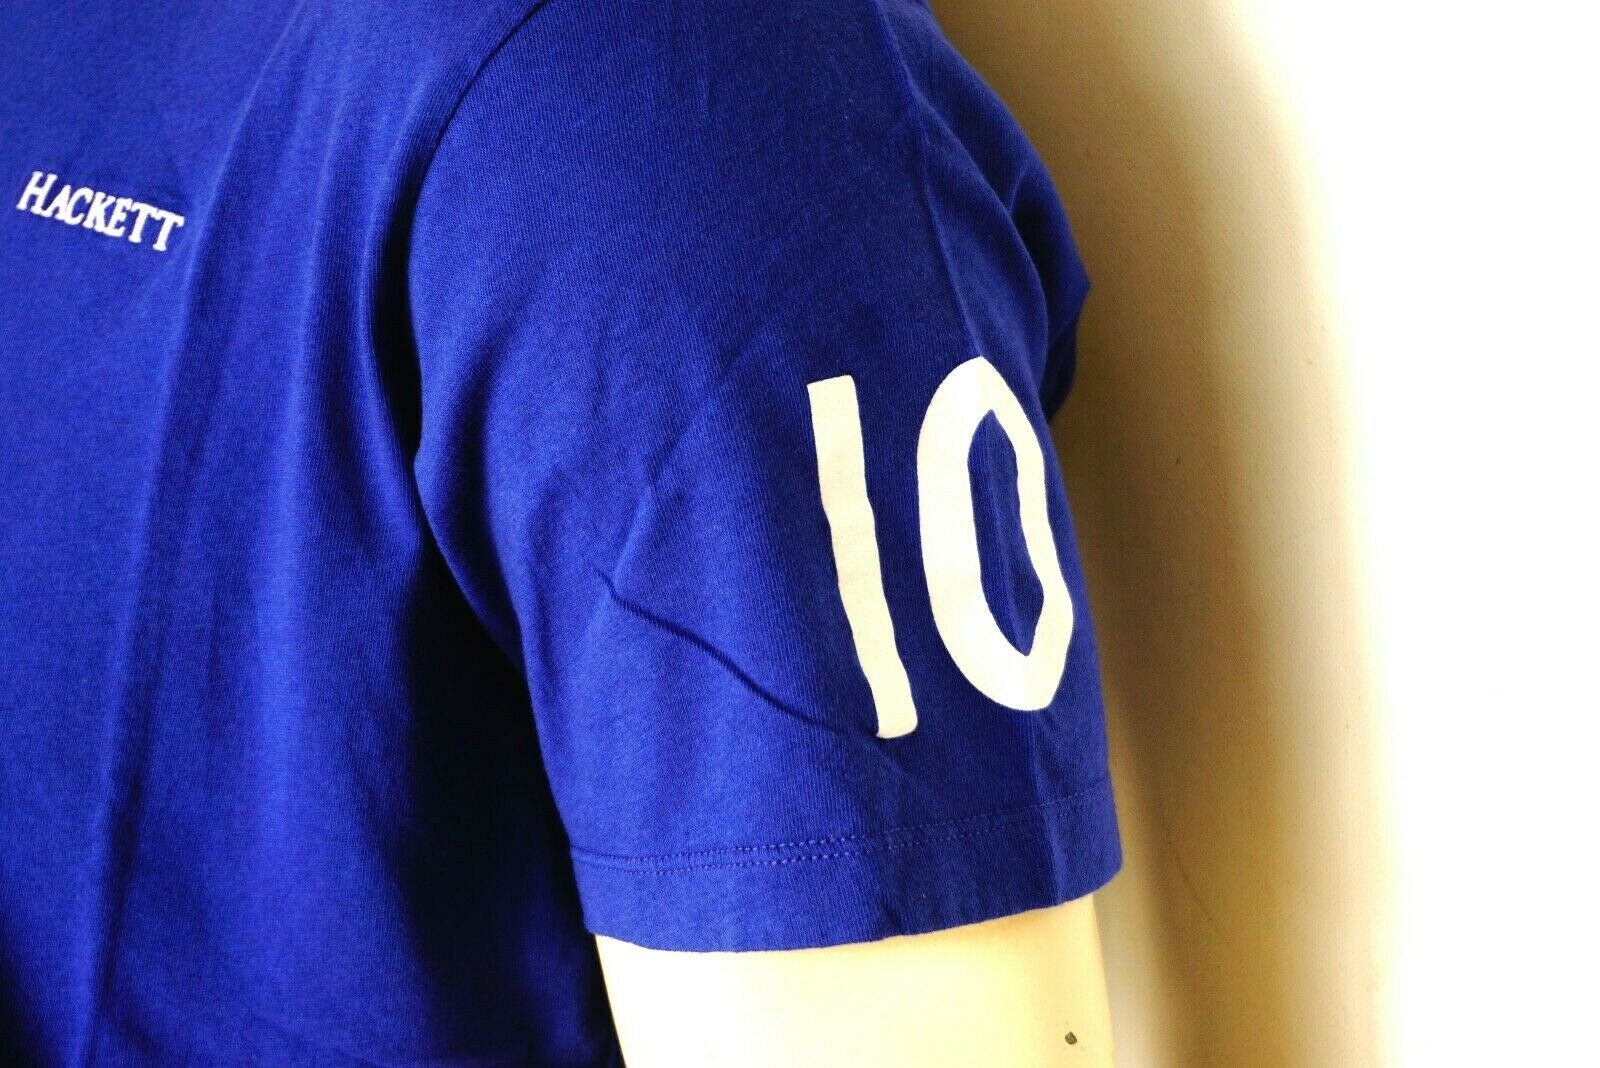 France T-Shirt, Hackett World Blau Herren Cup T-shirts Hackett T-Shirt Herren. Hacket